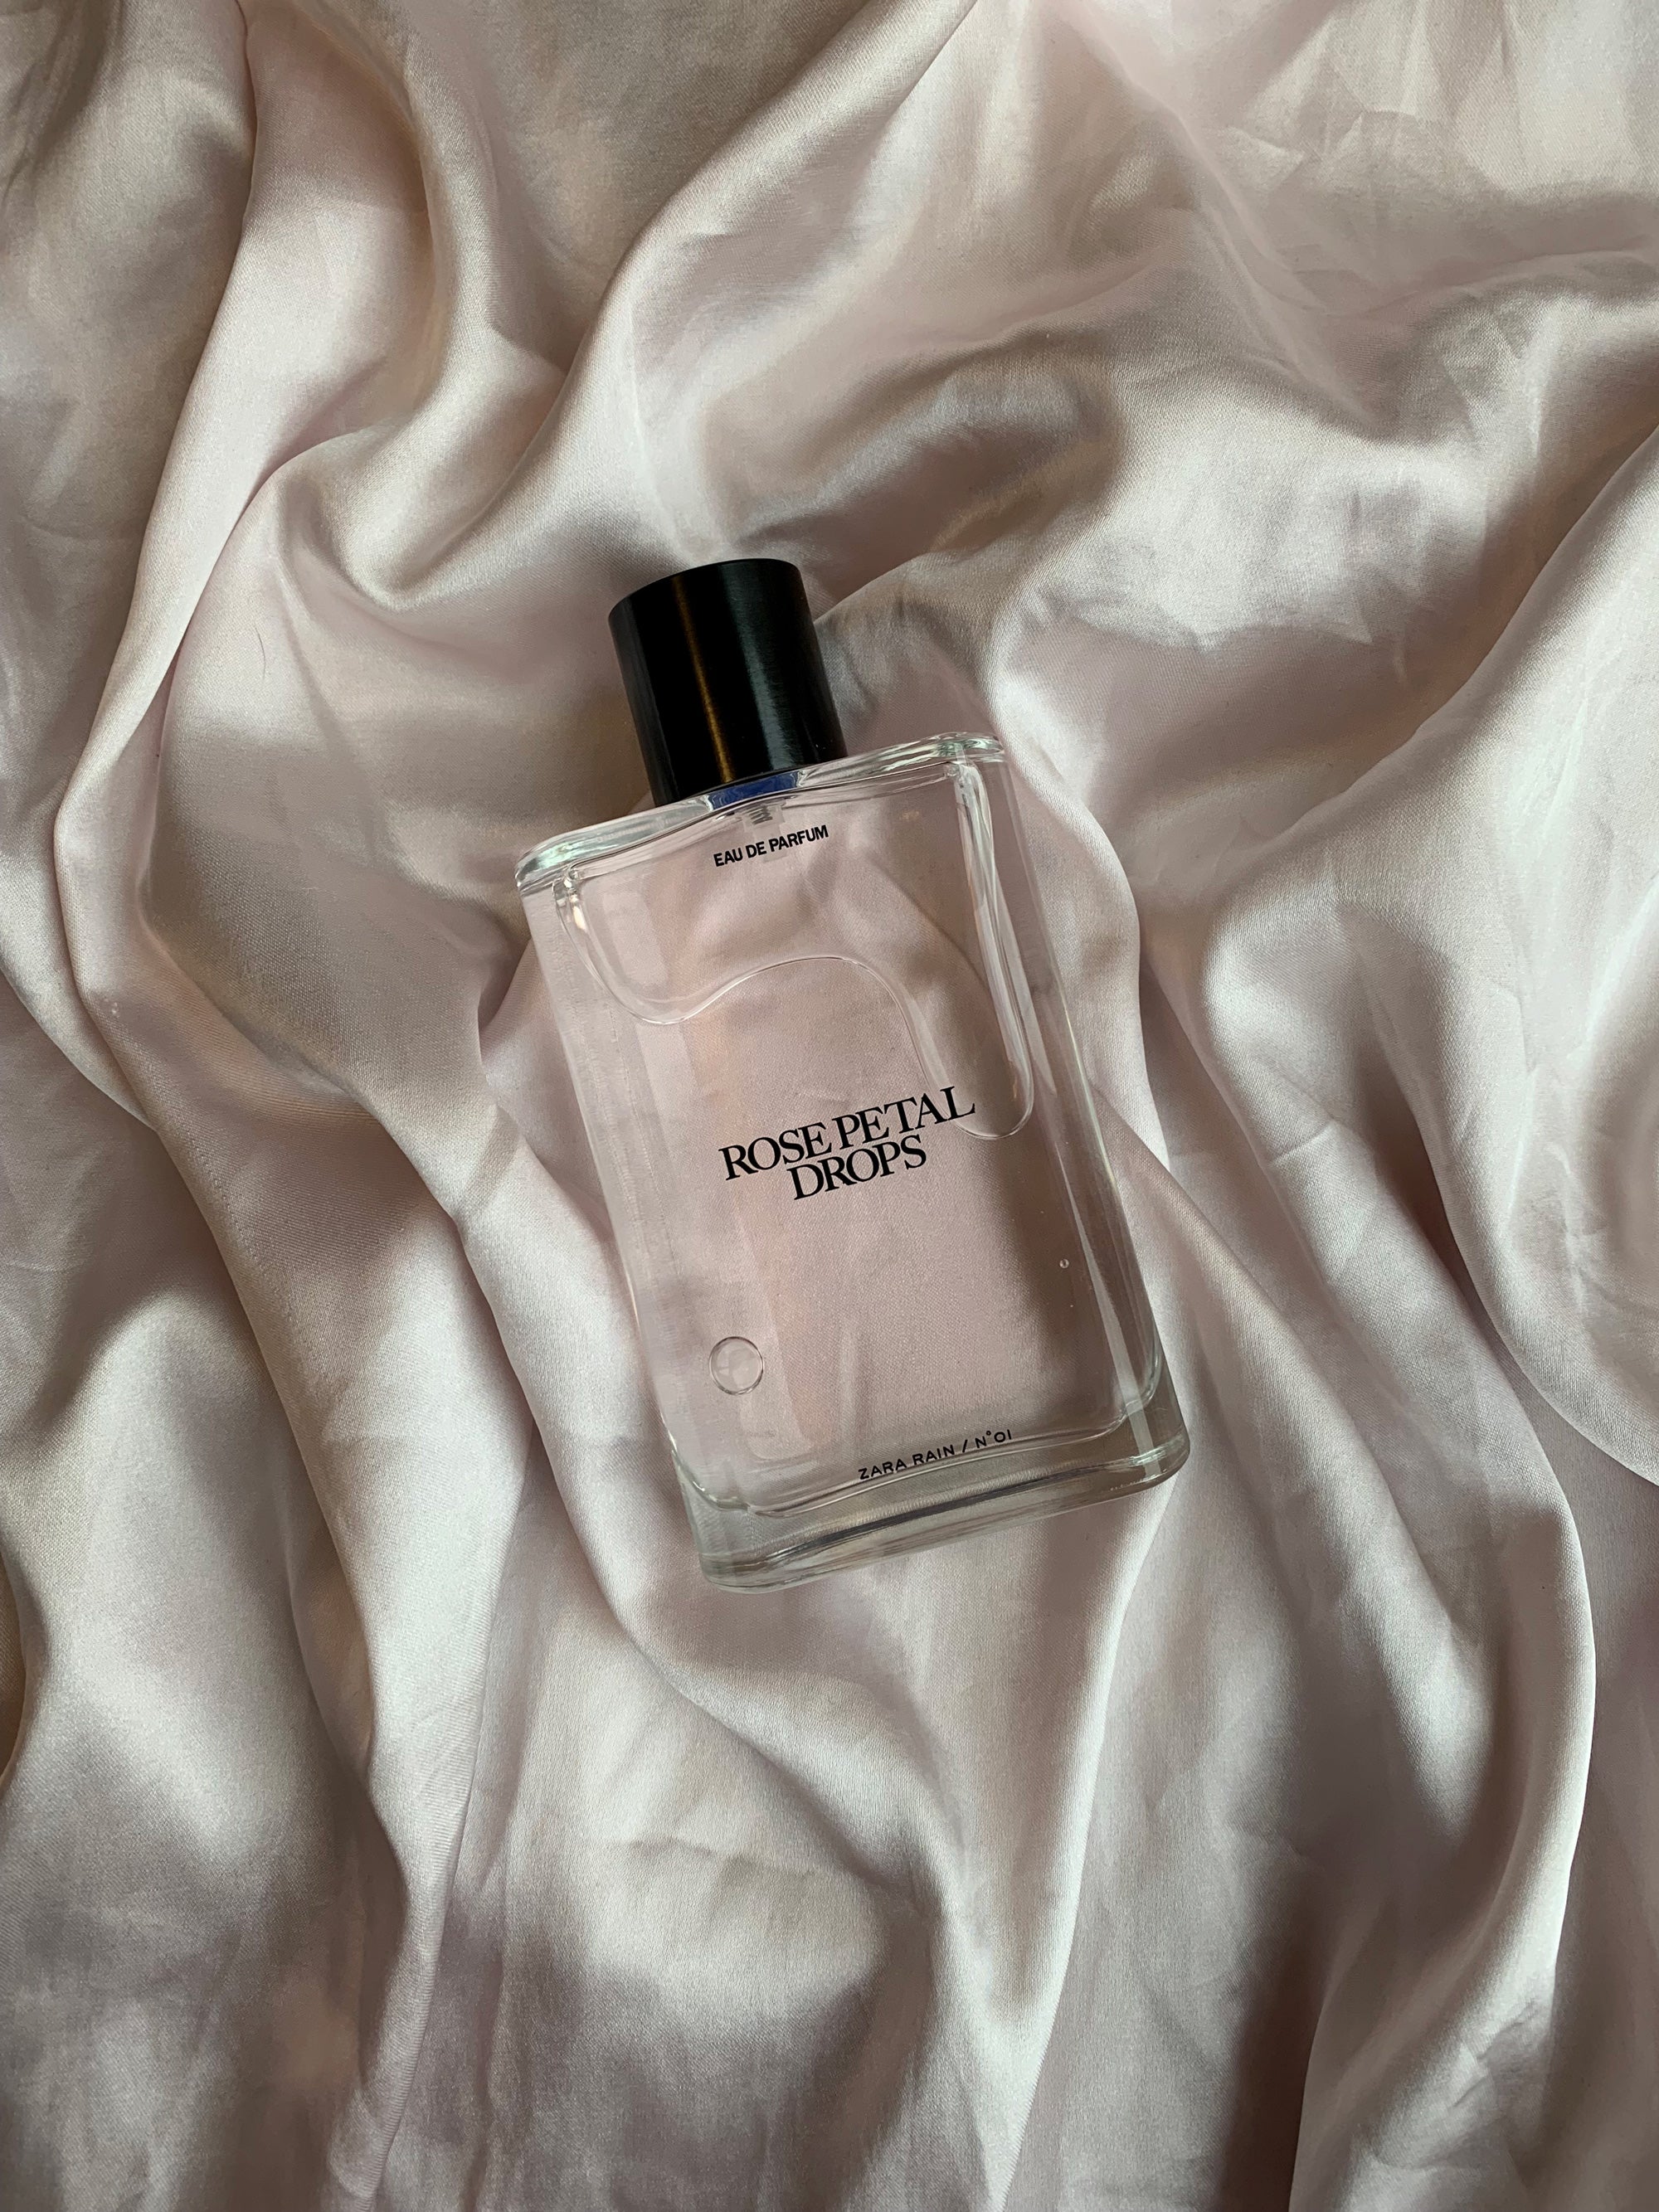 Are Zara Fragrances Any Good? – Purely Fragrance